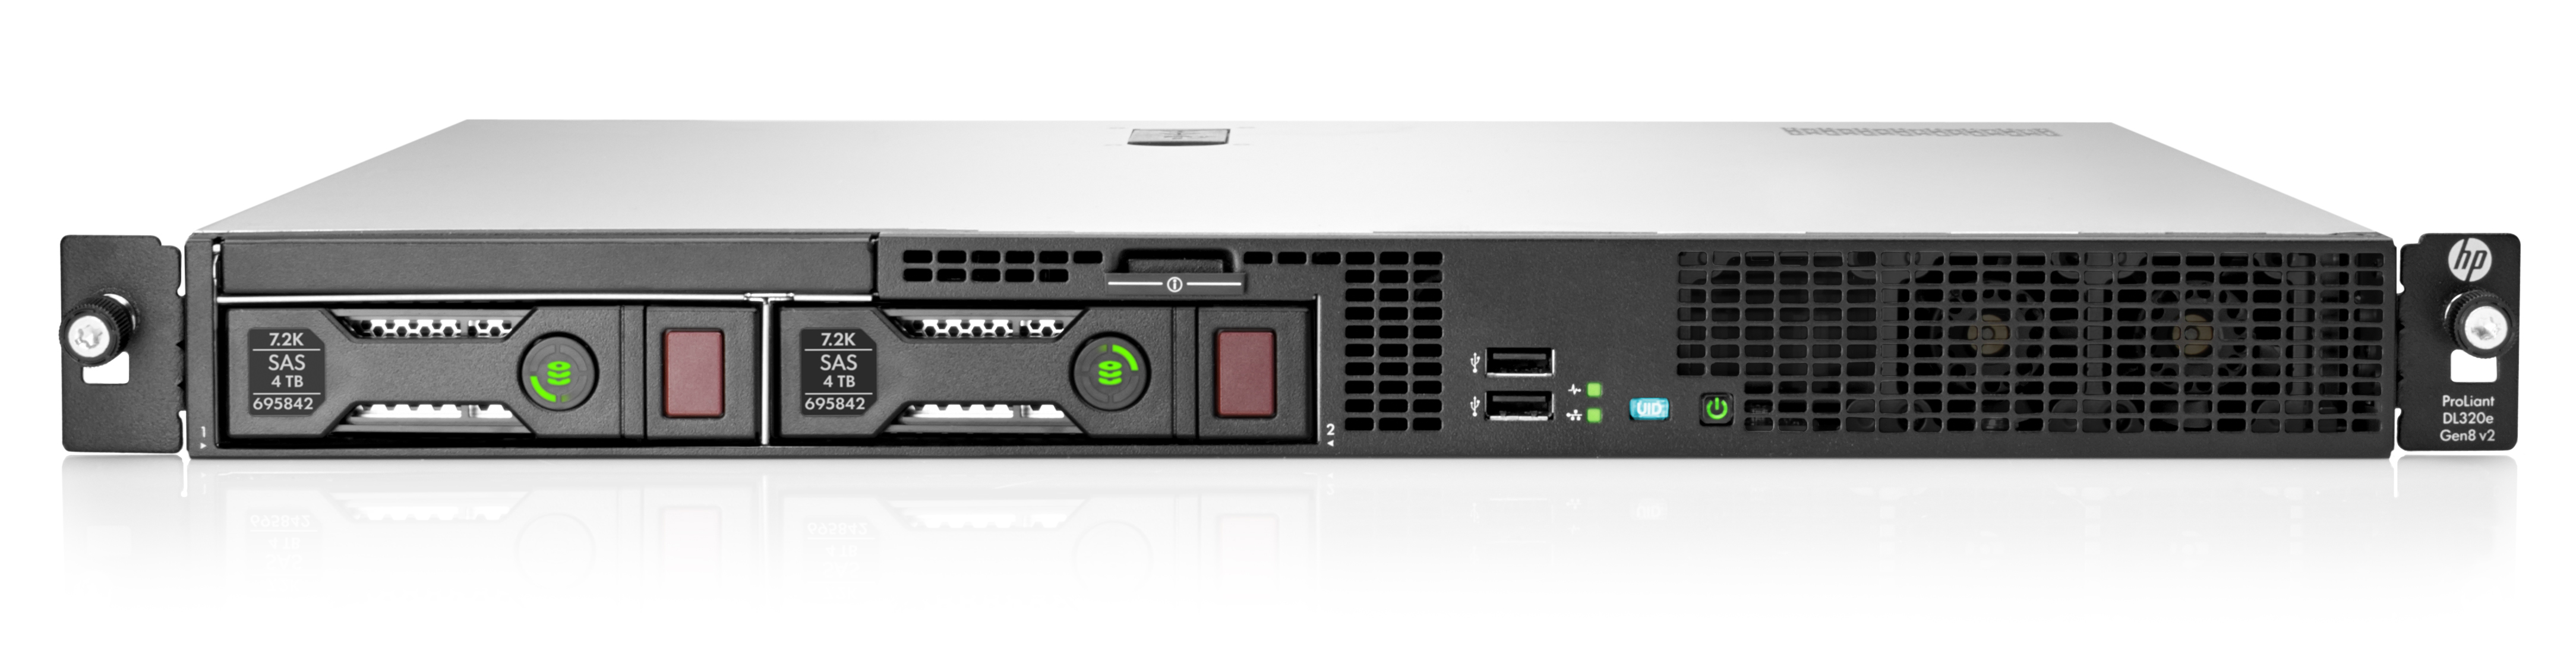 Сервер HP Proliant DL320e Gen8 v2 E3-1240v3 Hot Plug (1U)/Xeon4C 3.4GHz(8Mb)/1x8GbUD_12800/P222FBWC(512Mb/RAID0/1/1+0/5/5+0)/noHDD(4)SFF/noDVD/iLO4std/2x1GbEth/PS300W(NHP), no rail kits  722547-421